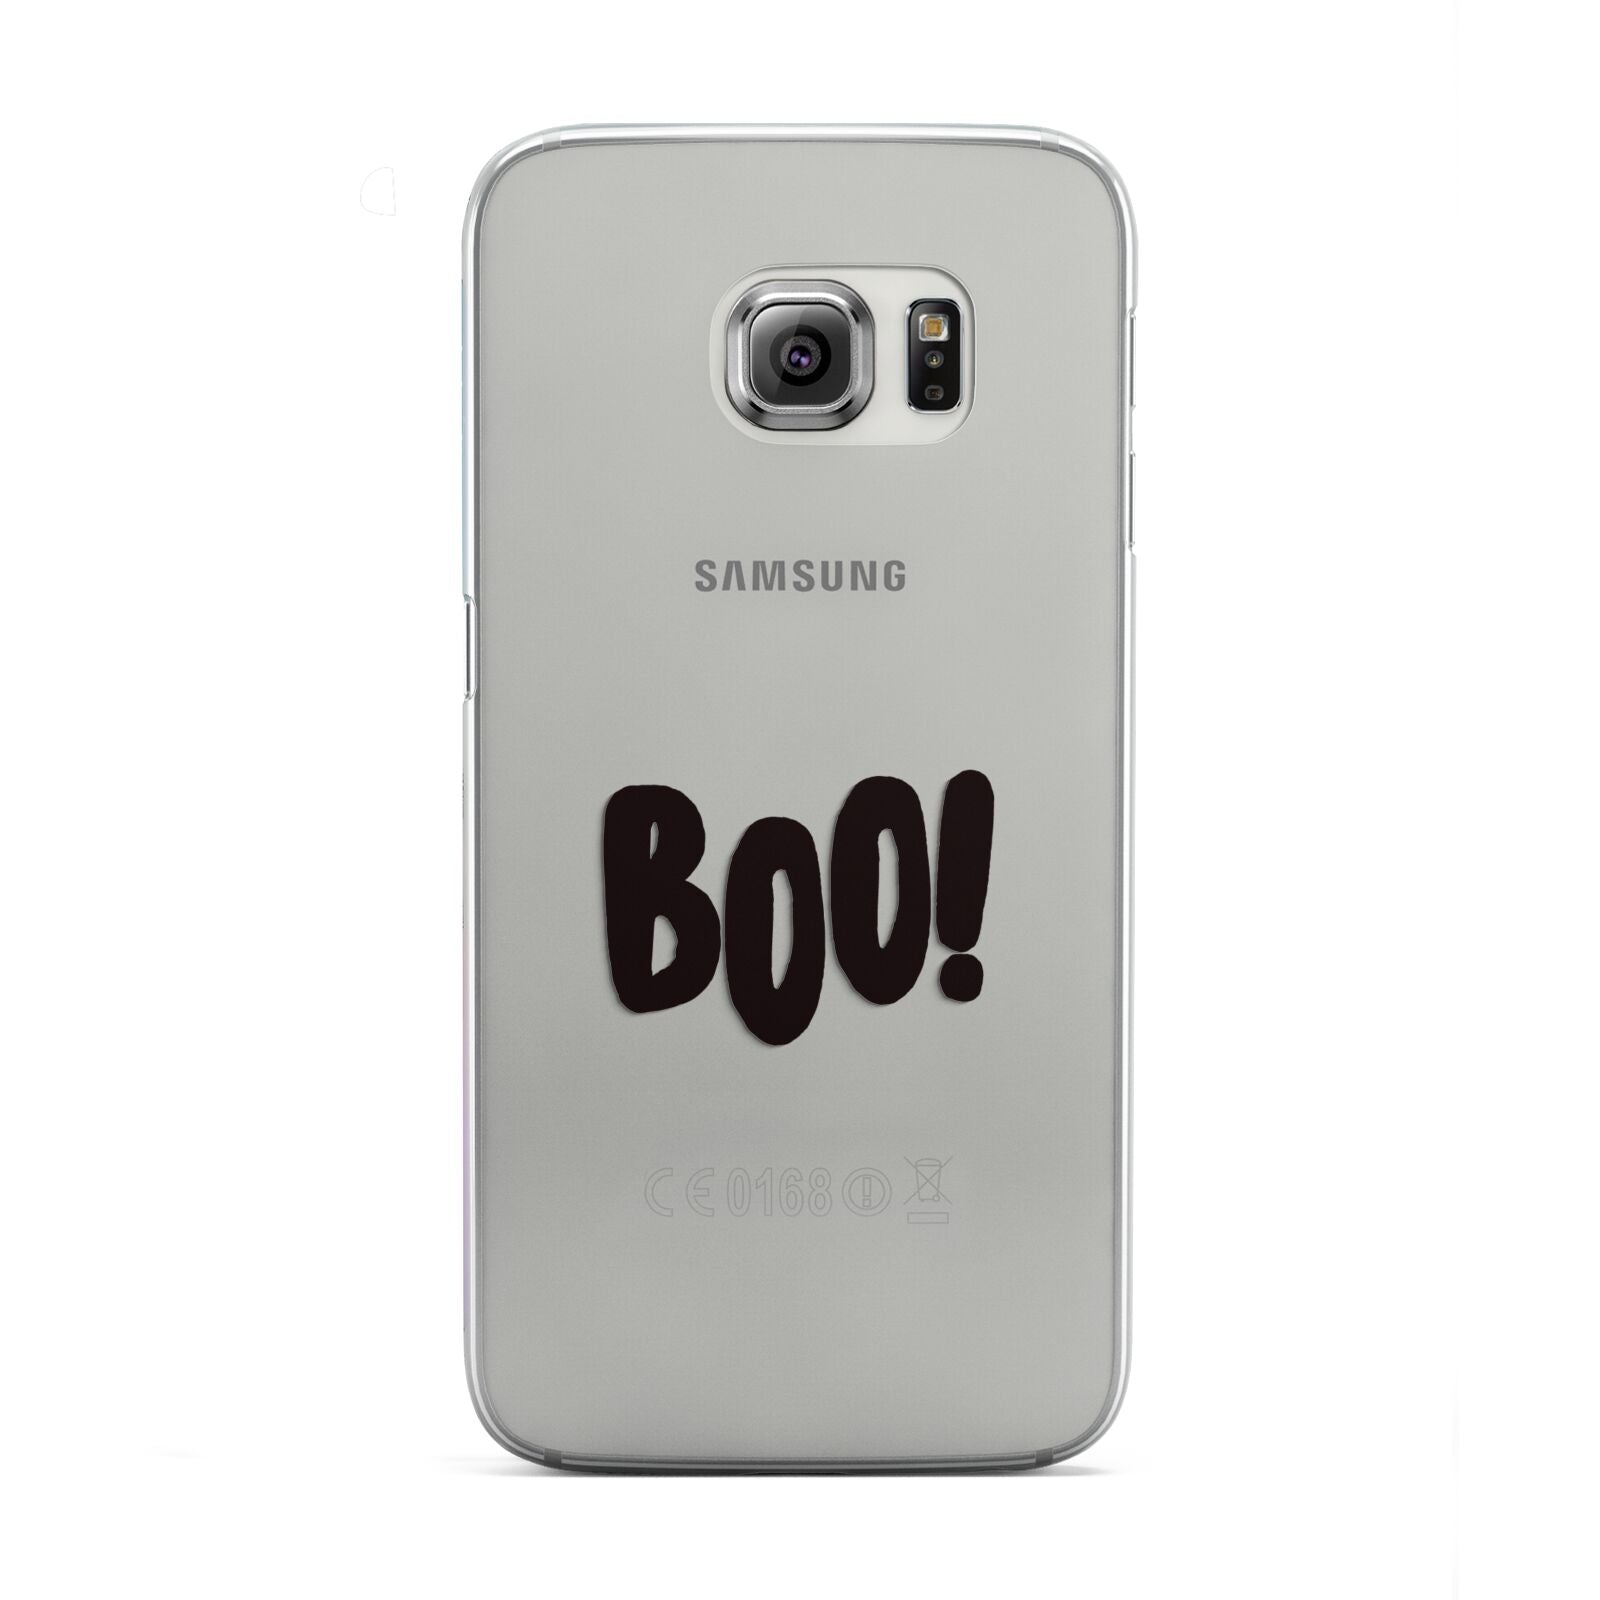 Boo Black Samsung Galaxy S6 Edge Case